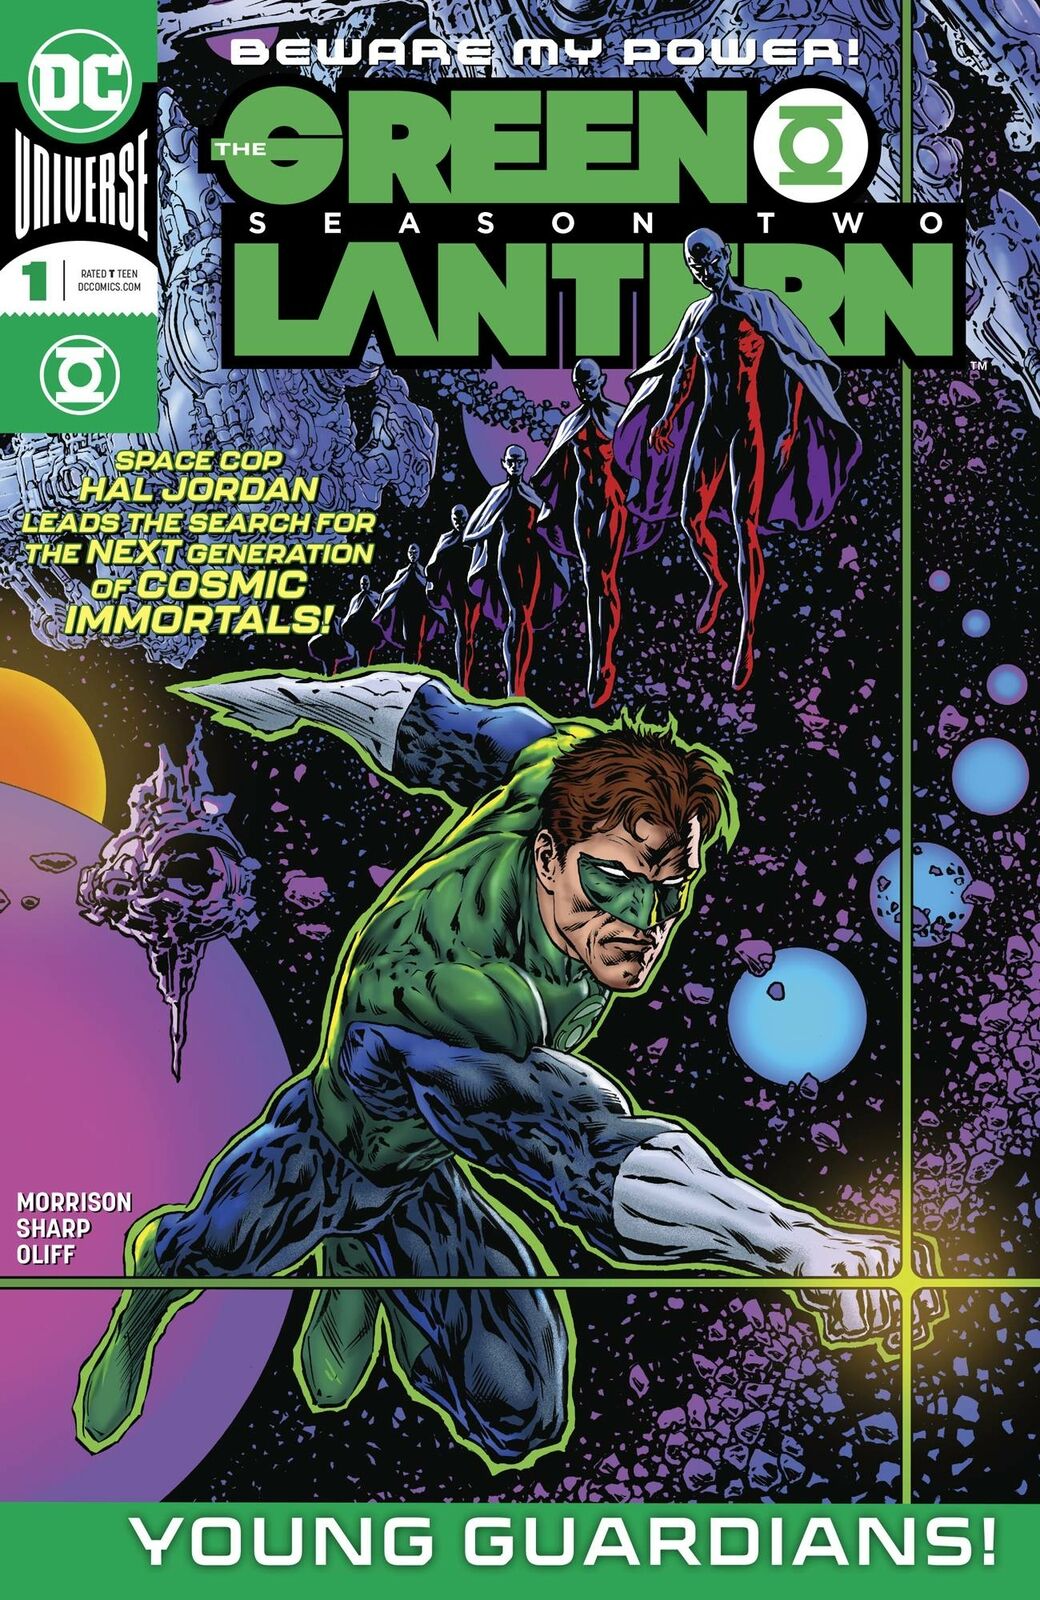 Green Lantern Season 2 #1-12 | Select Cover Main & Variants | DC Comics 2020-21